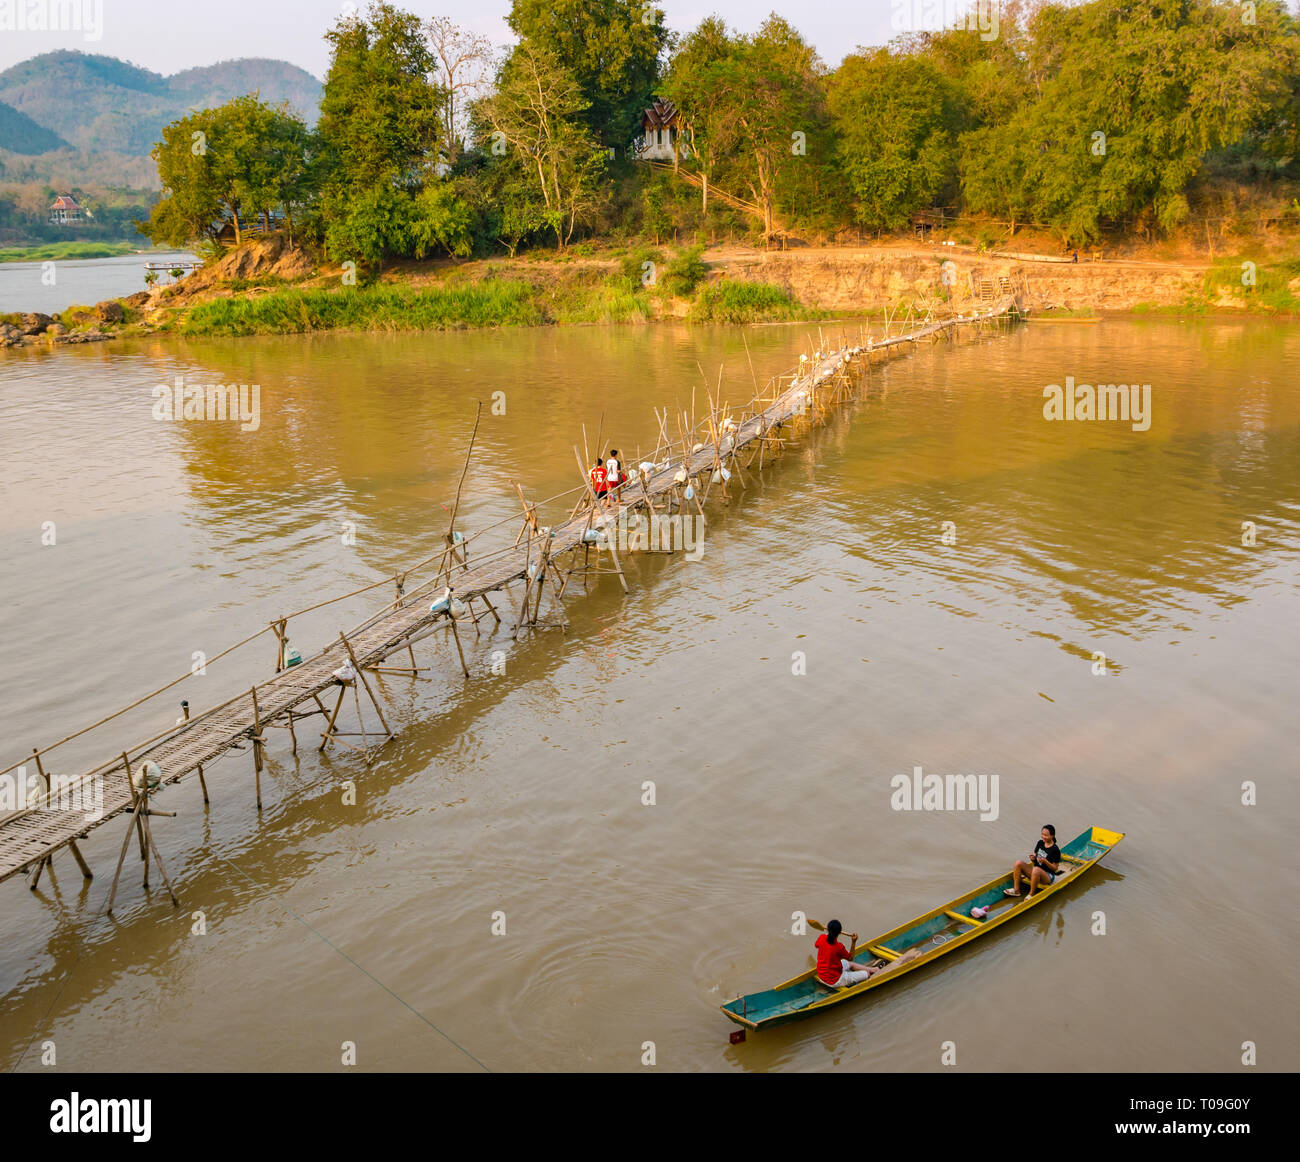 Boys walking on rickety bamboo cane bridge with girls in dugout canoe, Nam Kahn river tributary of Mekong, Luang Prabang, Laos, Indochina, SE Asia Stock Photo